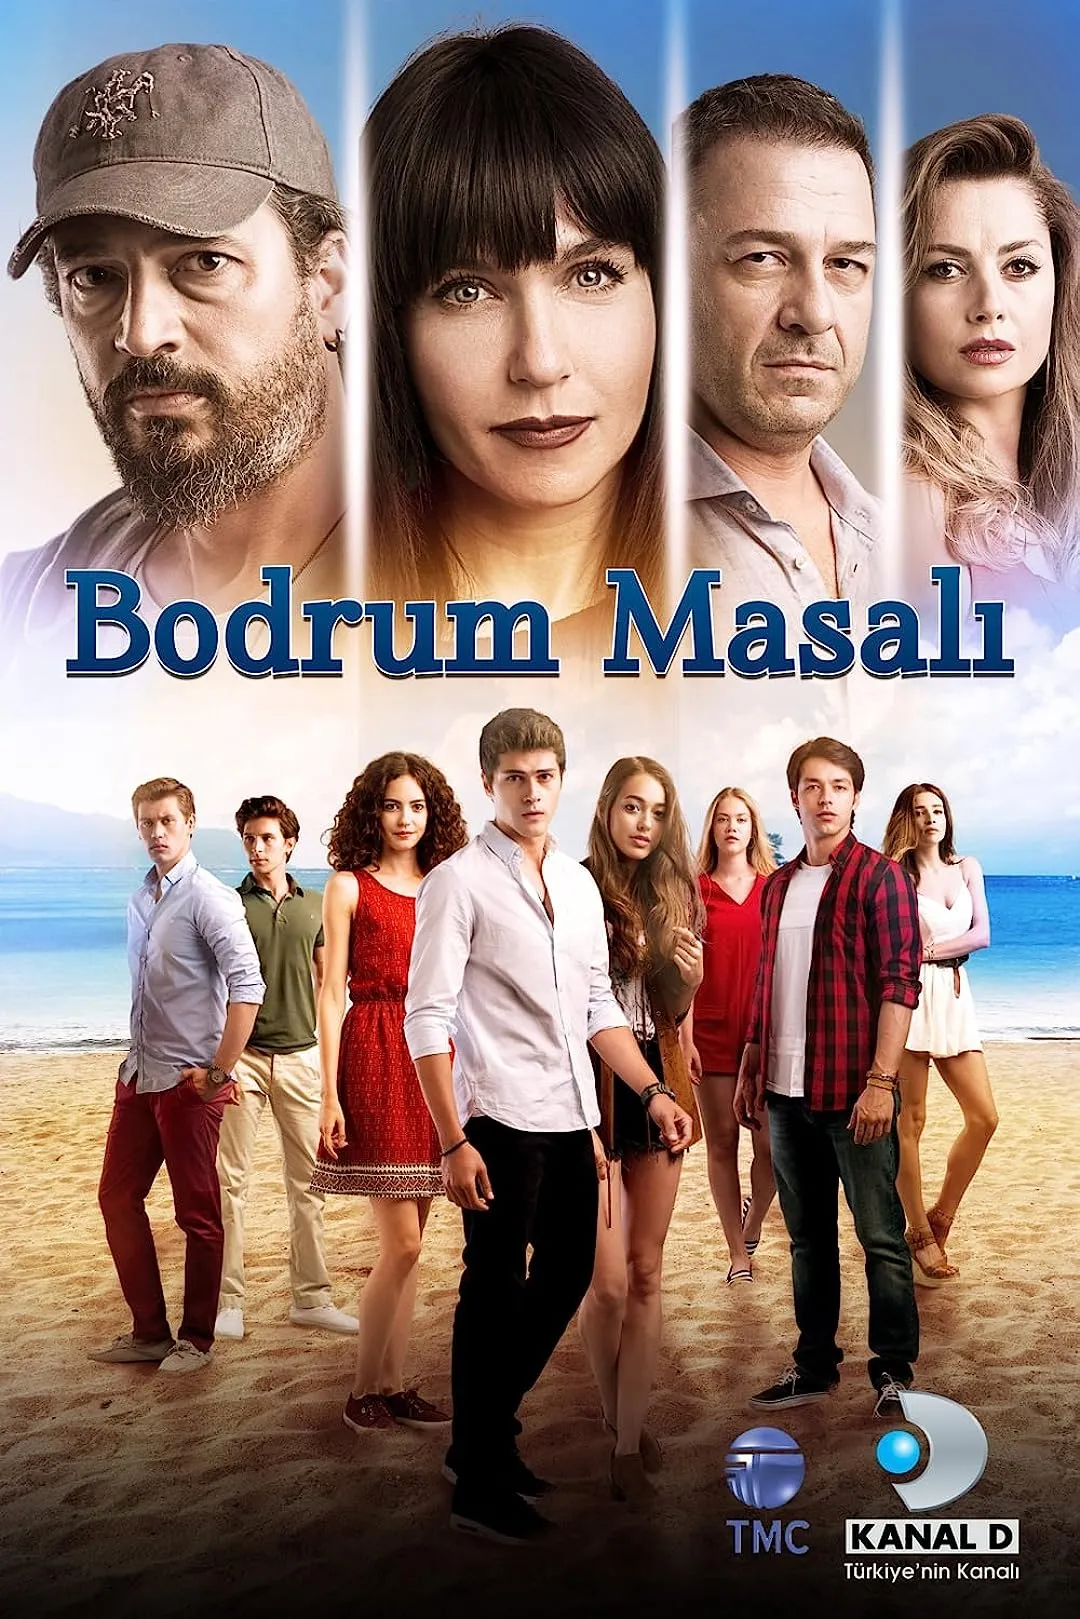 Bodrum Masali | Valurile vietii online subtitrat in romana